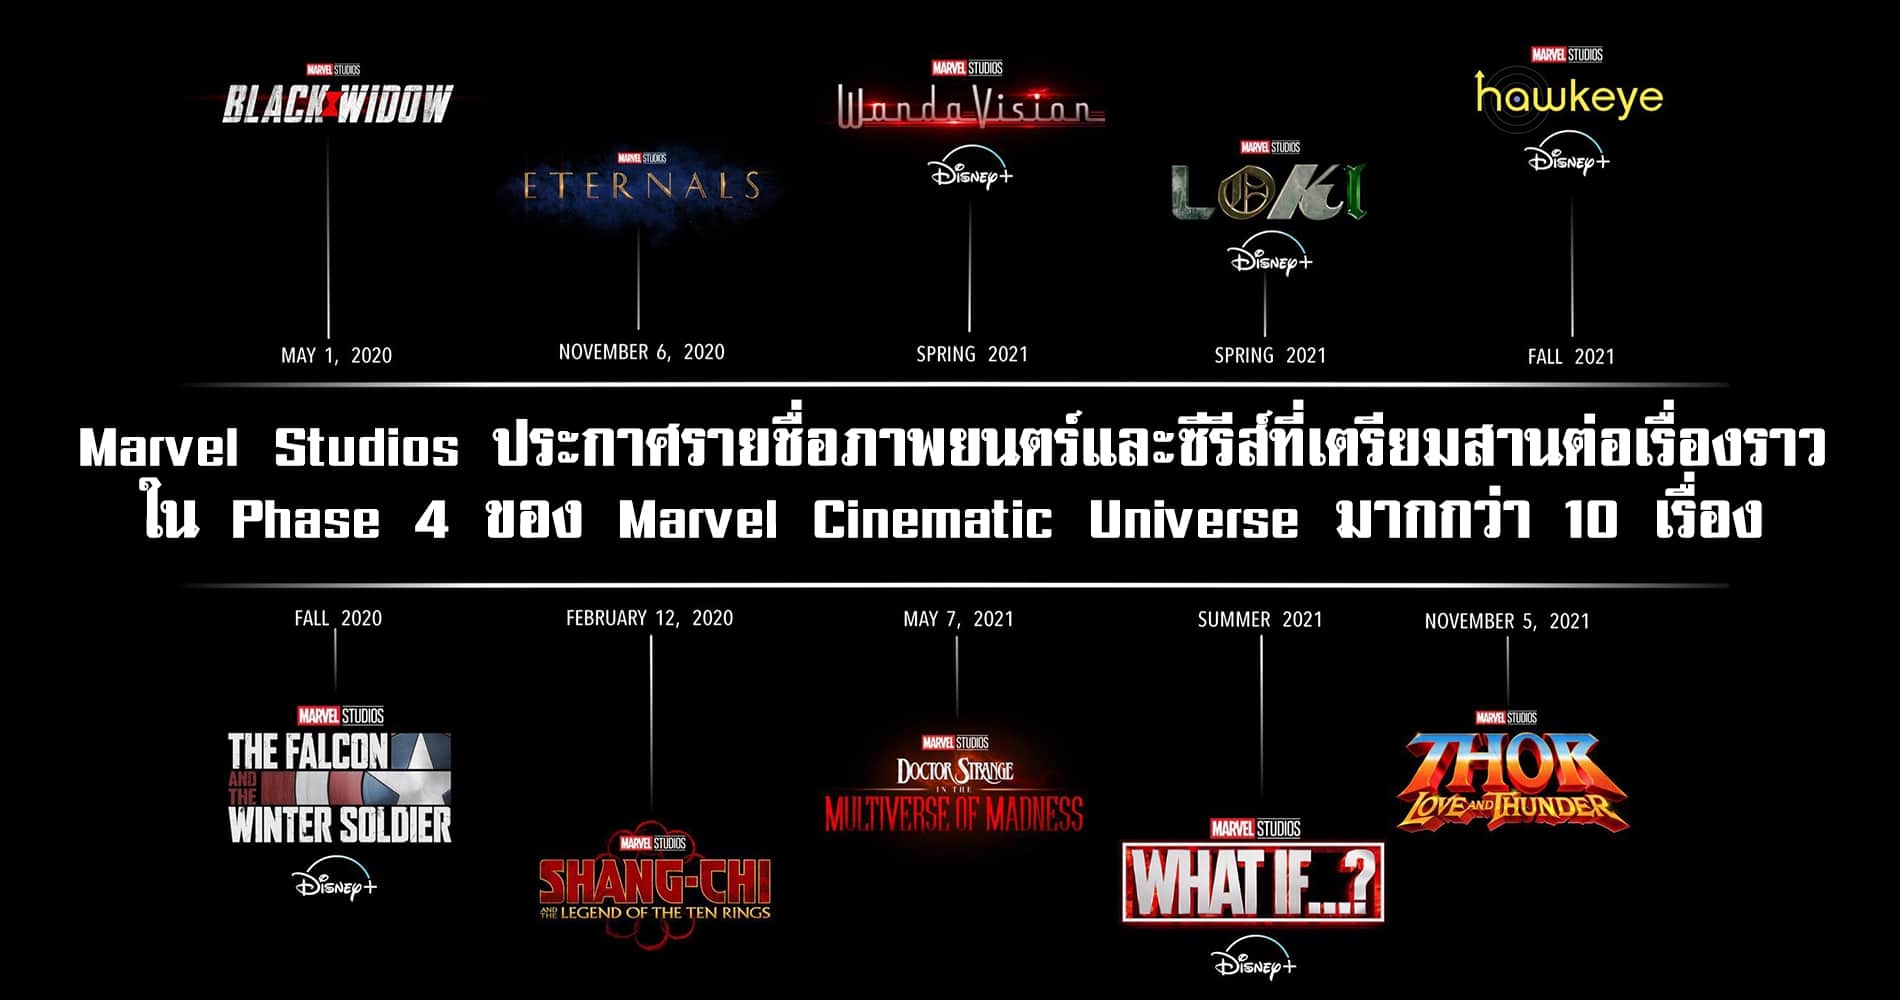 Marvel Studios ประกาศรายชื่อภาพยนตร์และซีรีส์ที่เตรียมสานต่อเรื่องราวใน Phase 4 ของ Marvel Cinematic Universe มากกว่า 10 เรื่อง 1